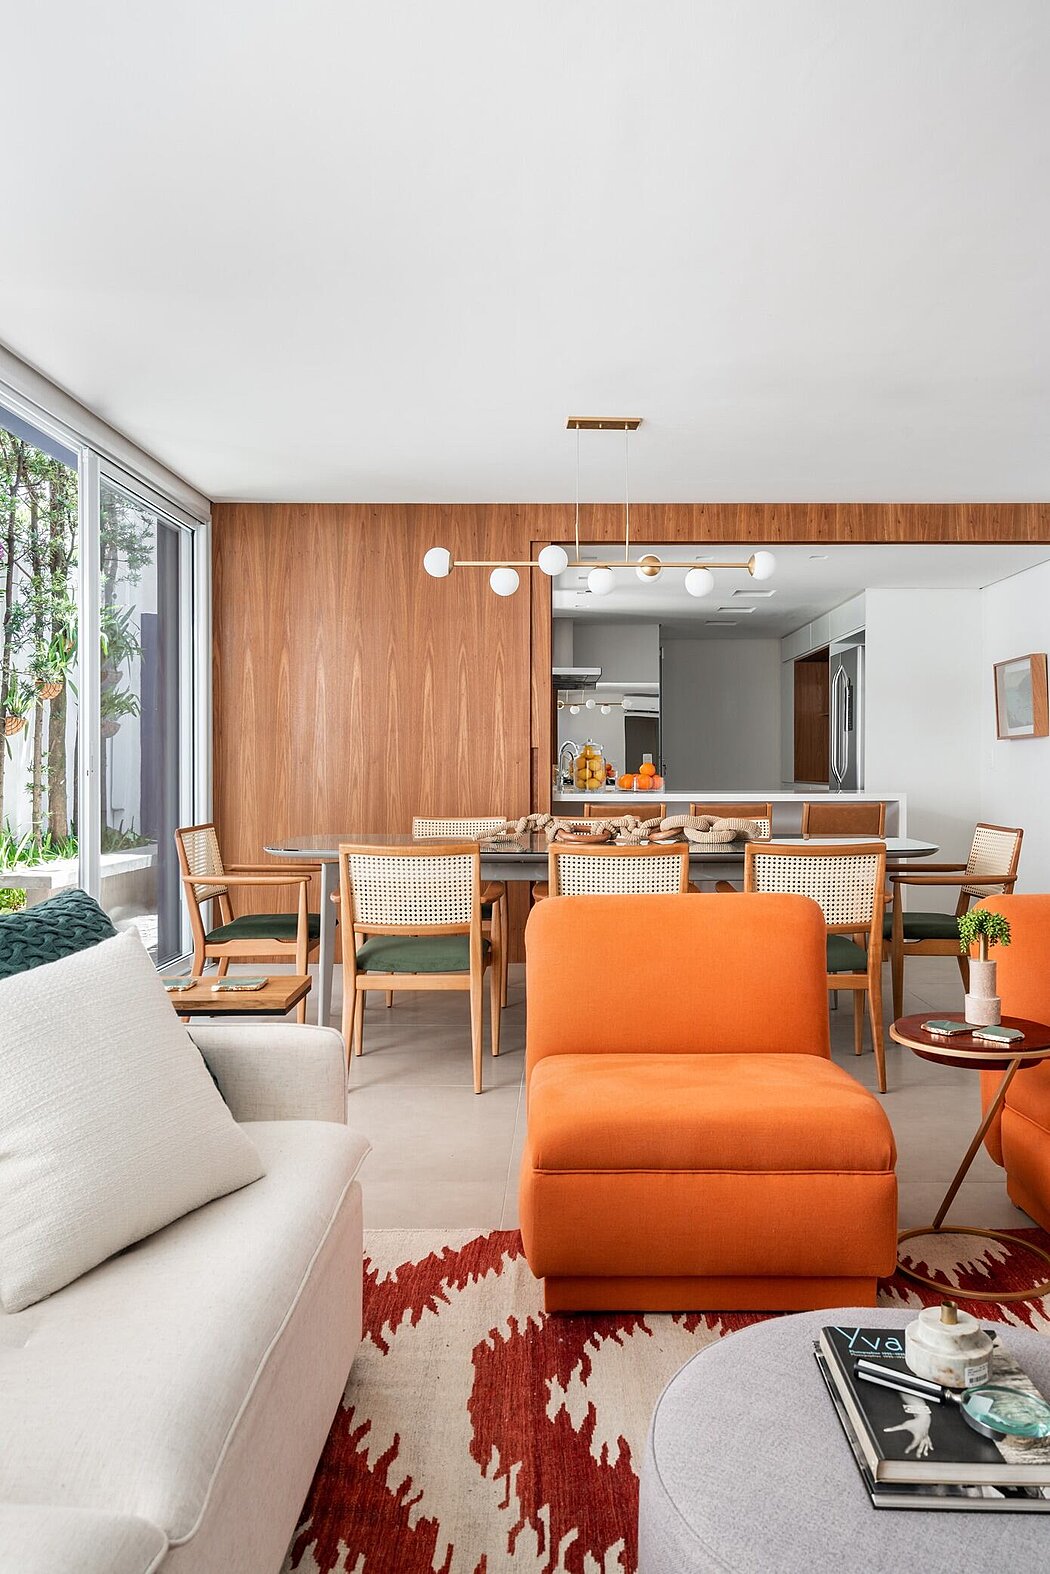 TH House: A Classic Sao Paulo Home Reimagined - 1